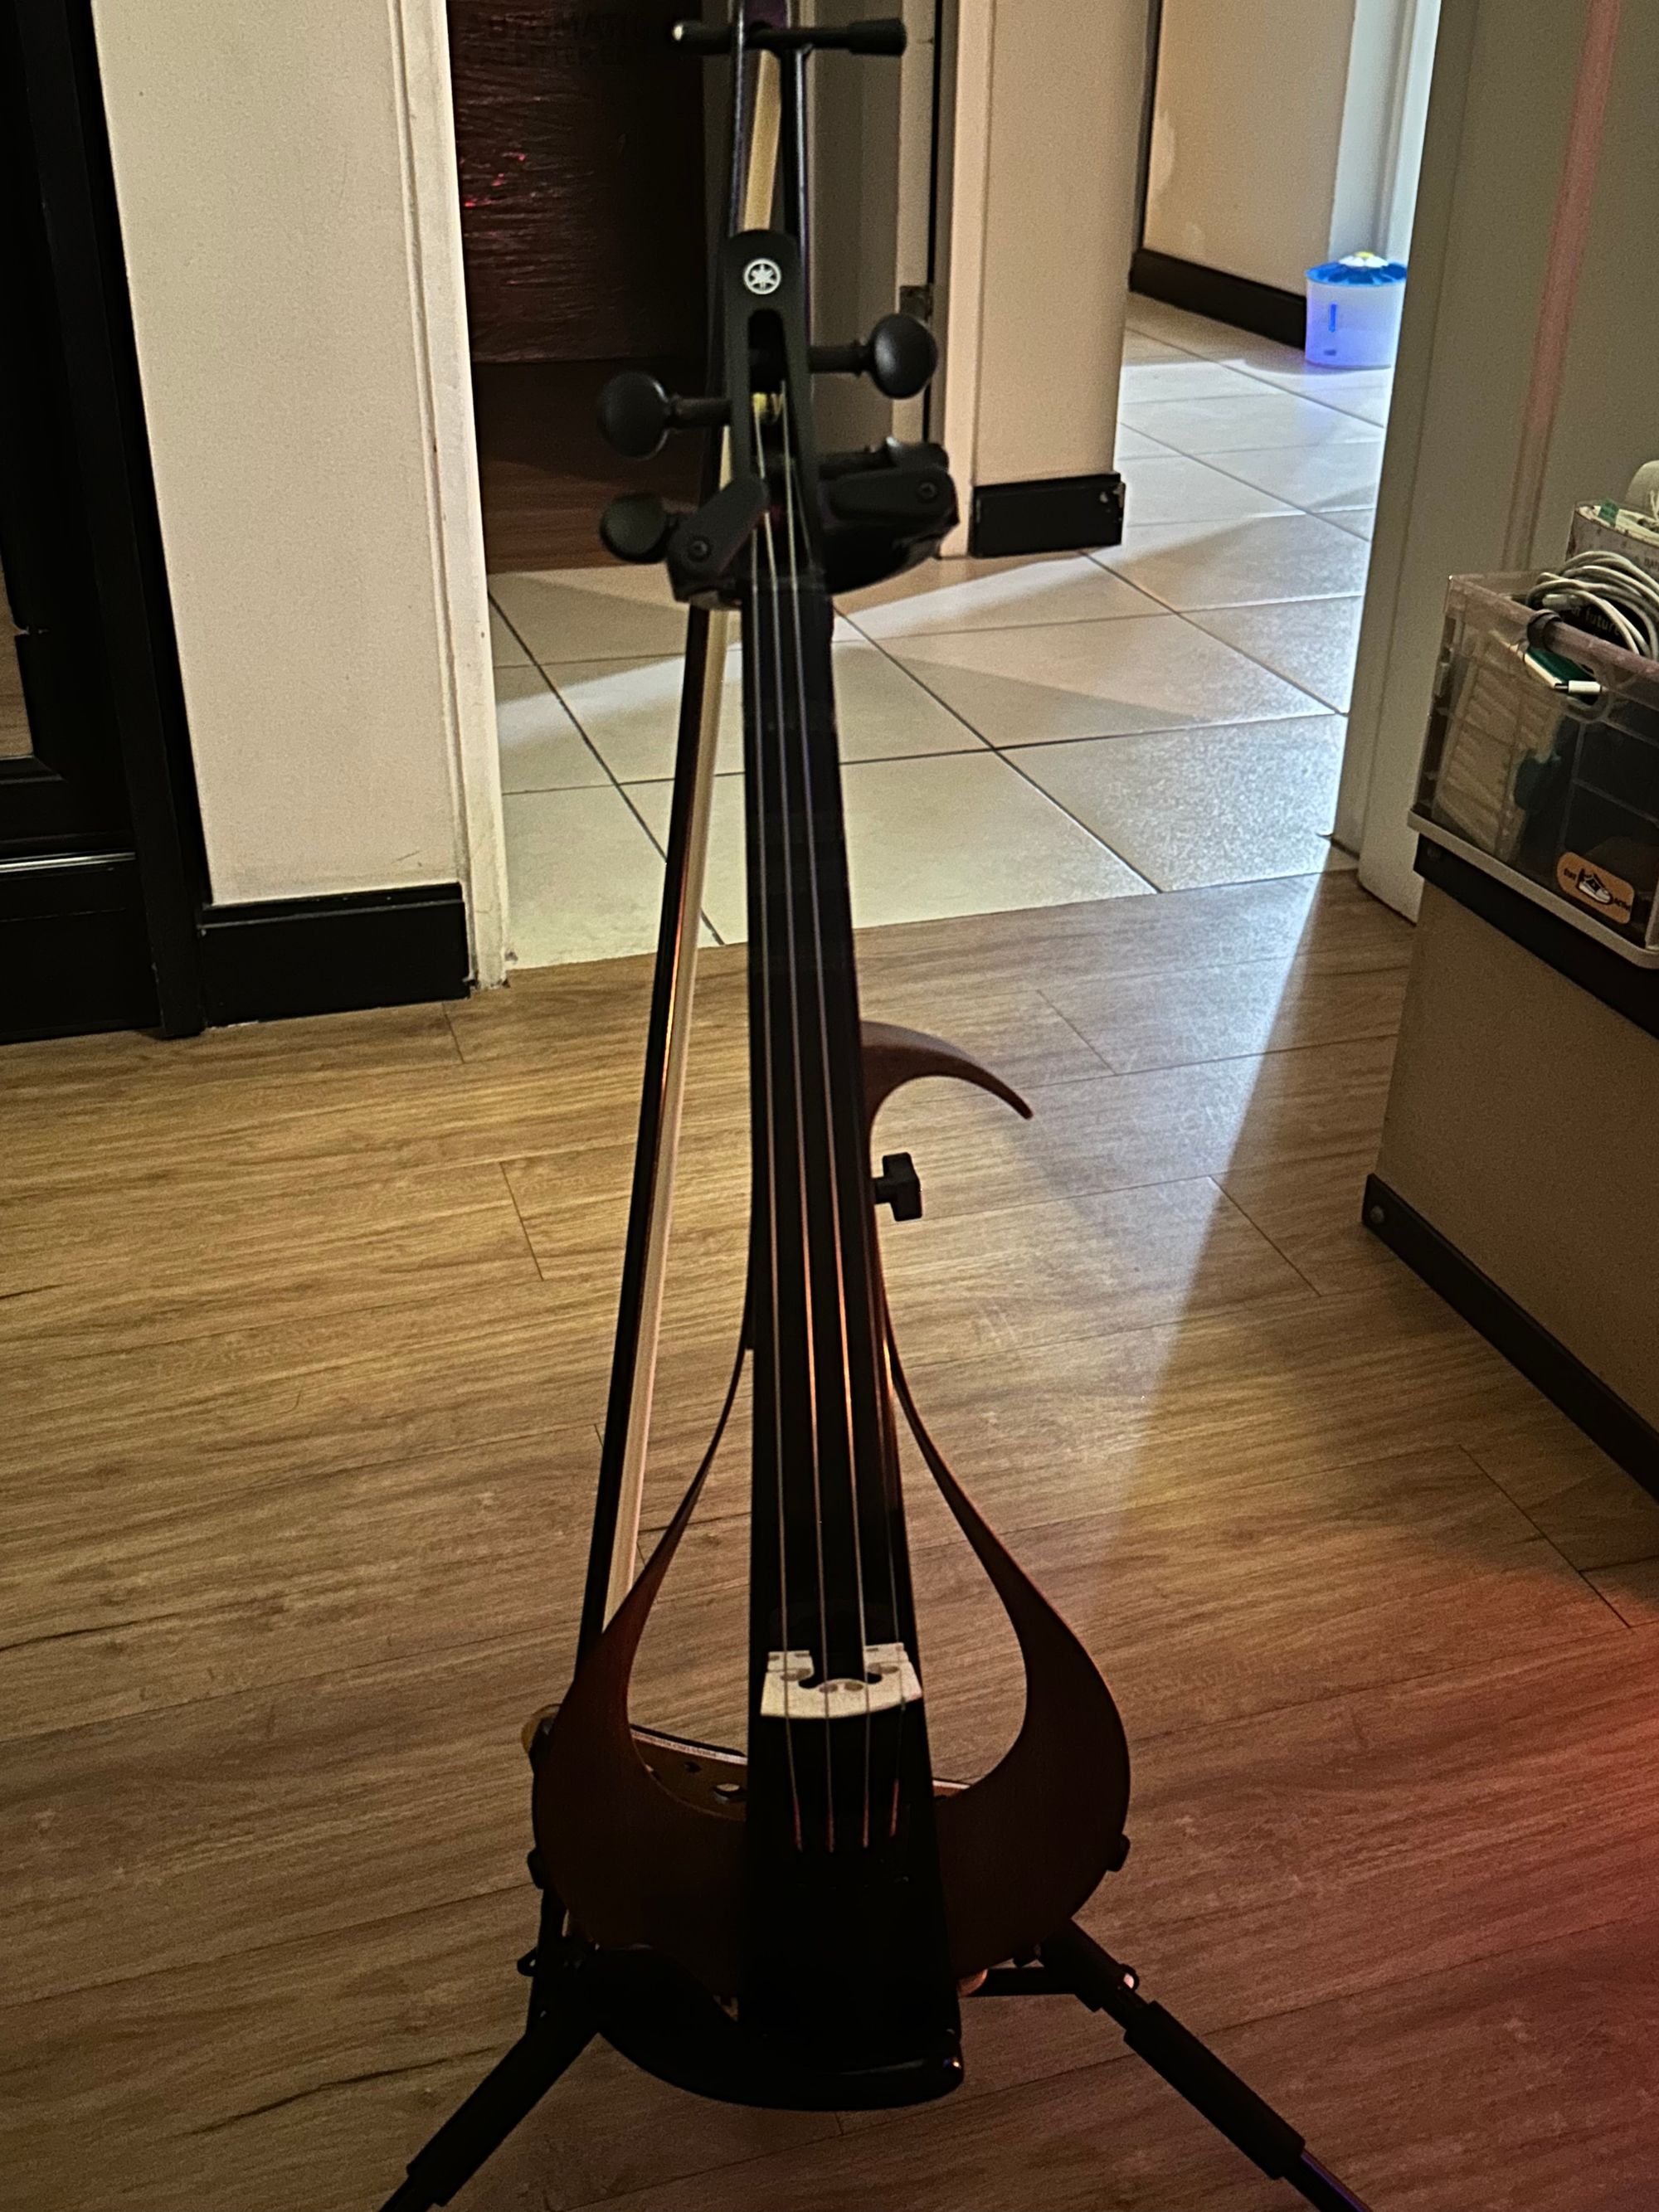 Beginner Violin practice setup